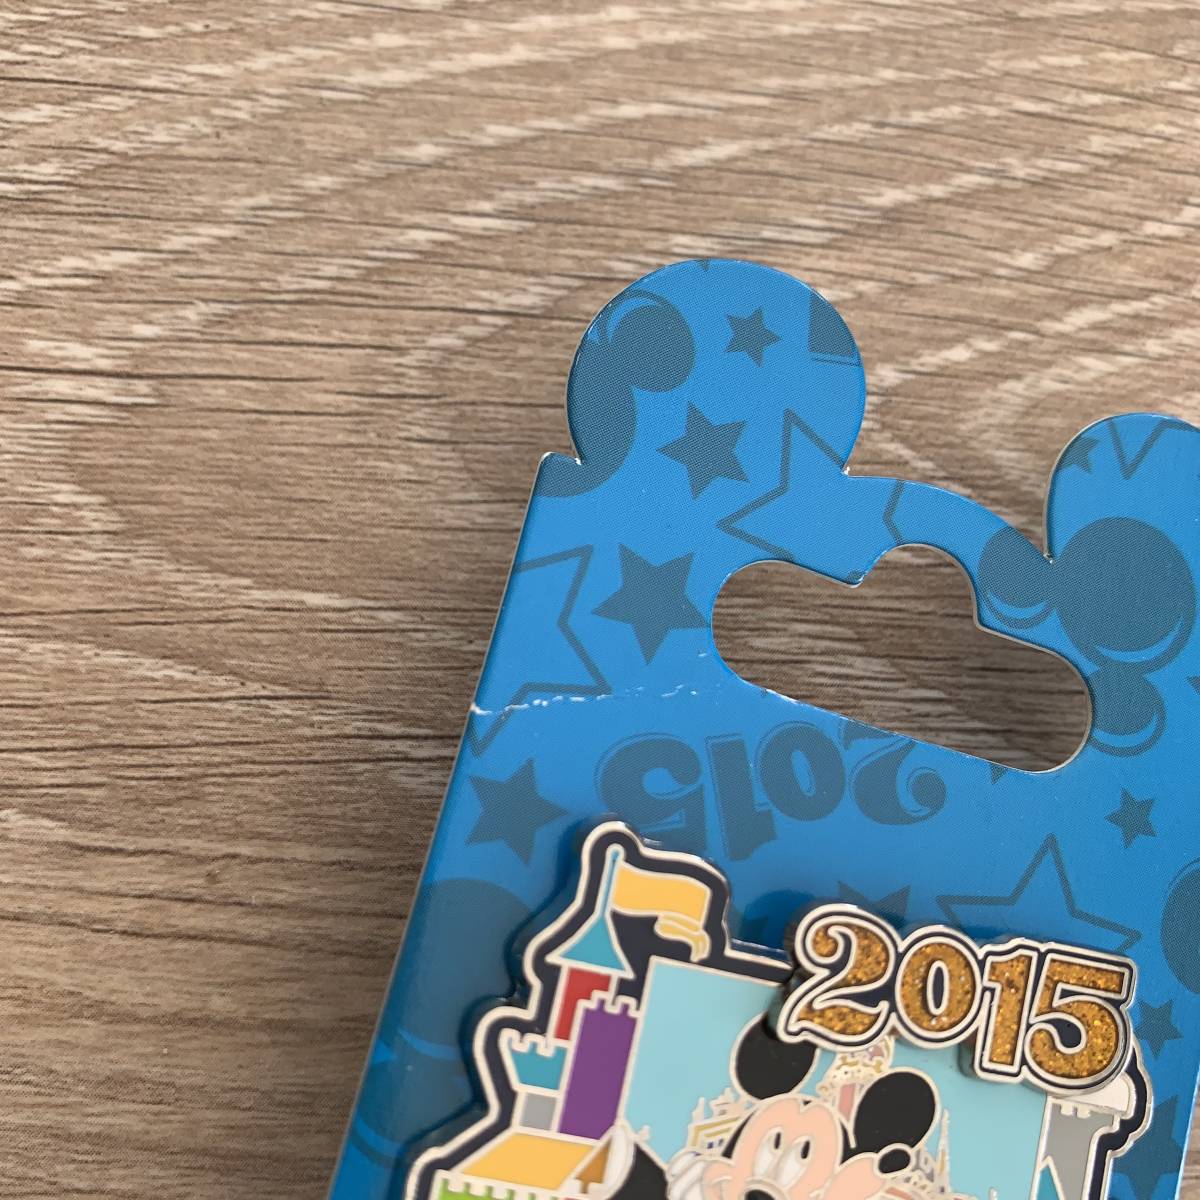  Mickey minnie 2015: abroad Disney pin badge!